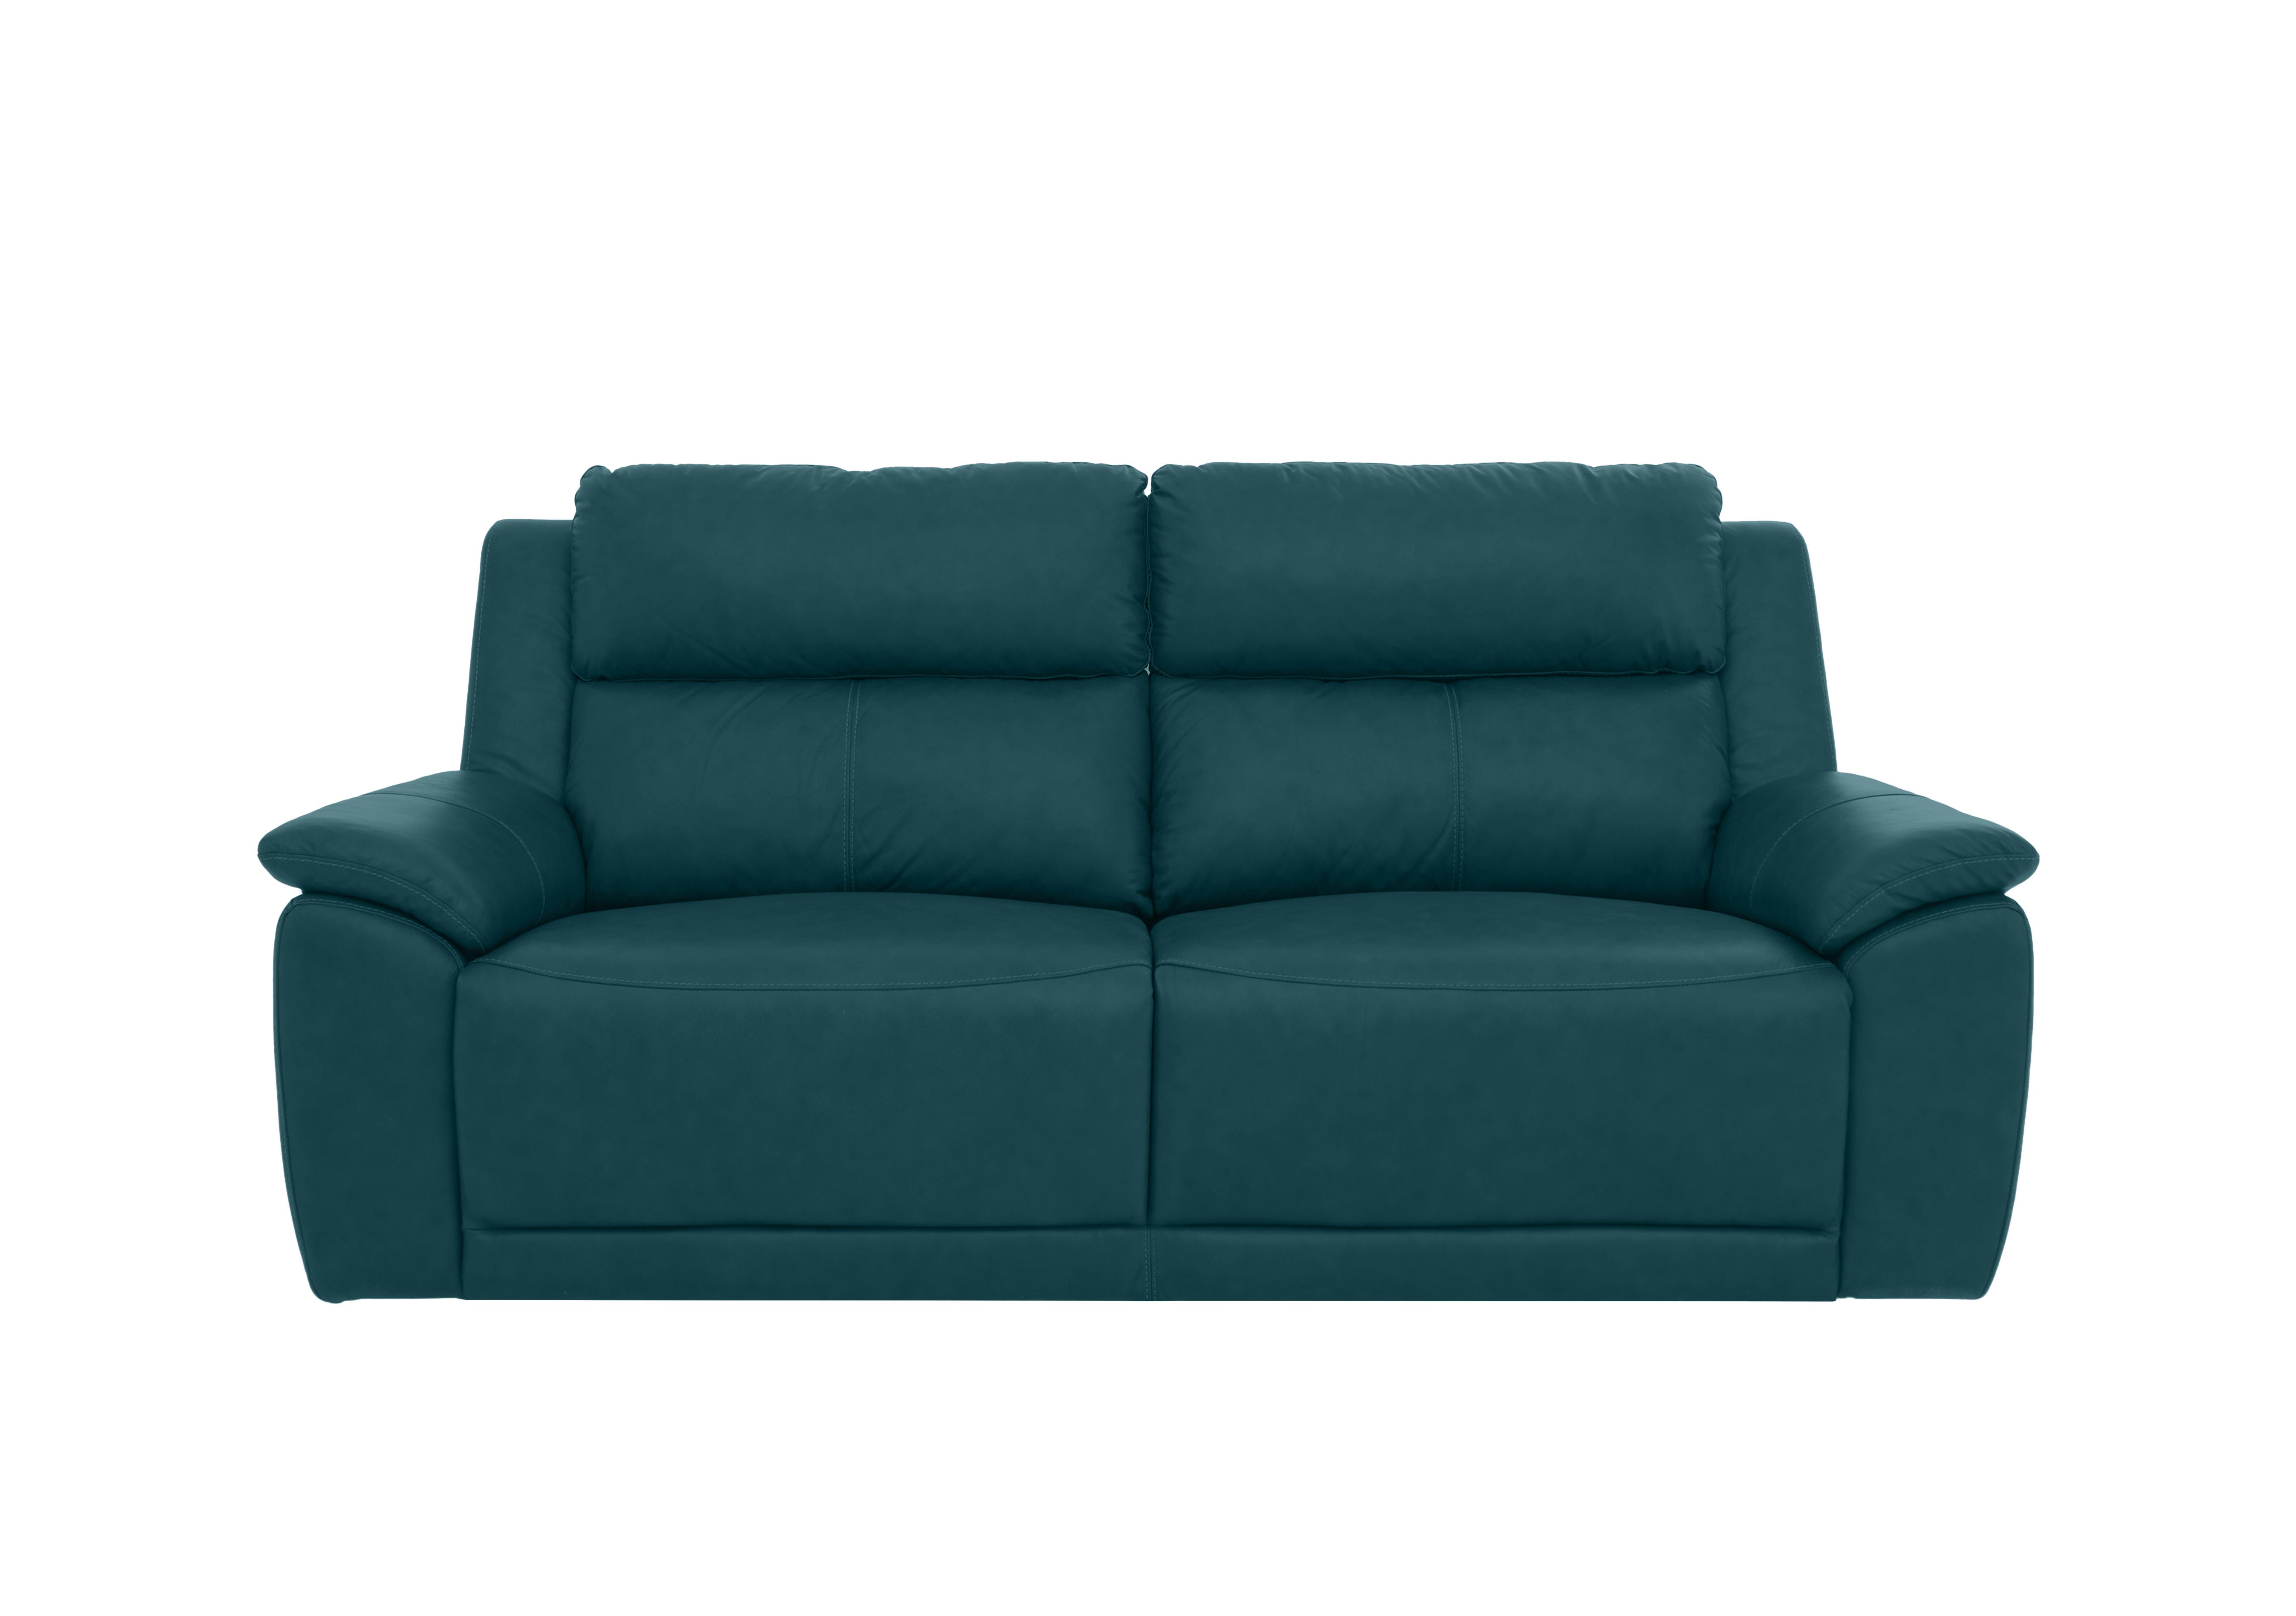 Utah 3 Seater Leather Sofa in Midnight Jade Le-9314 on Furniture Village